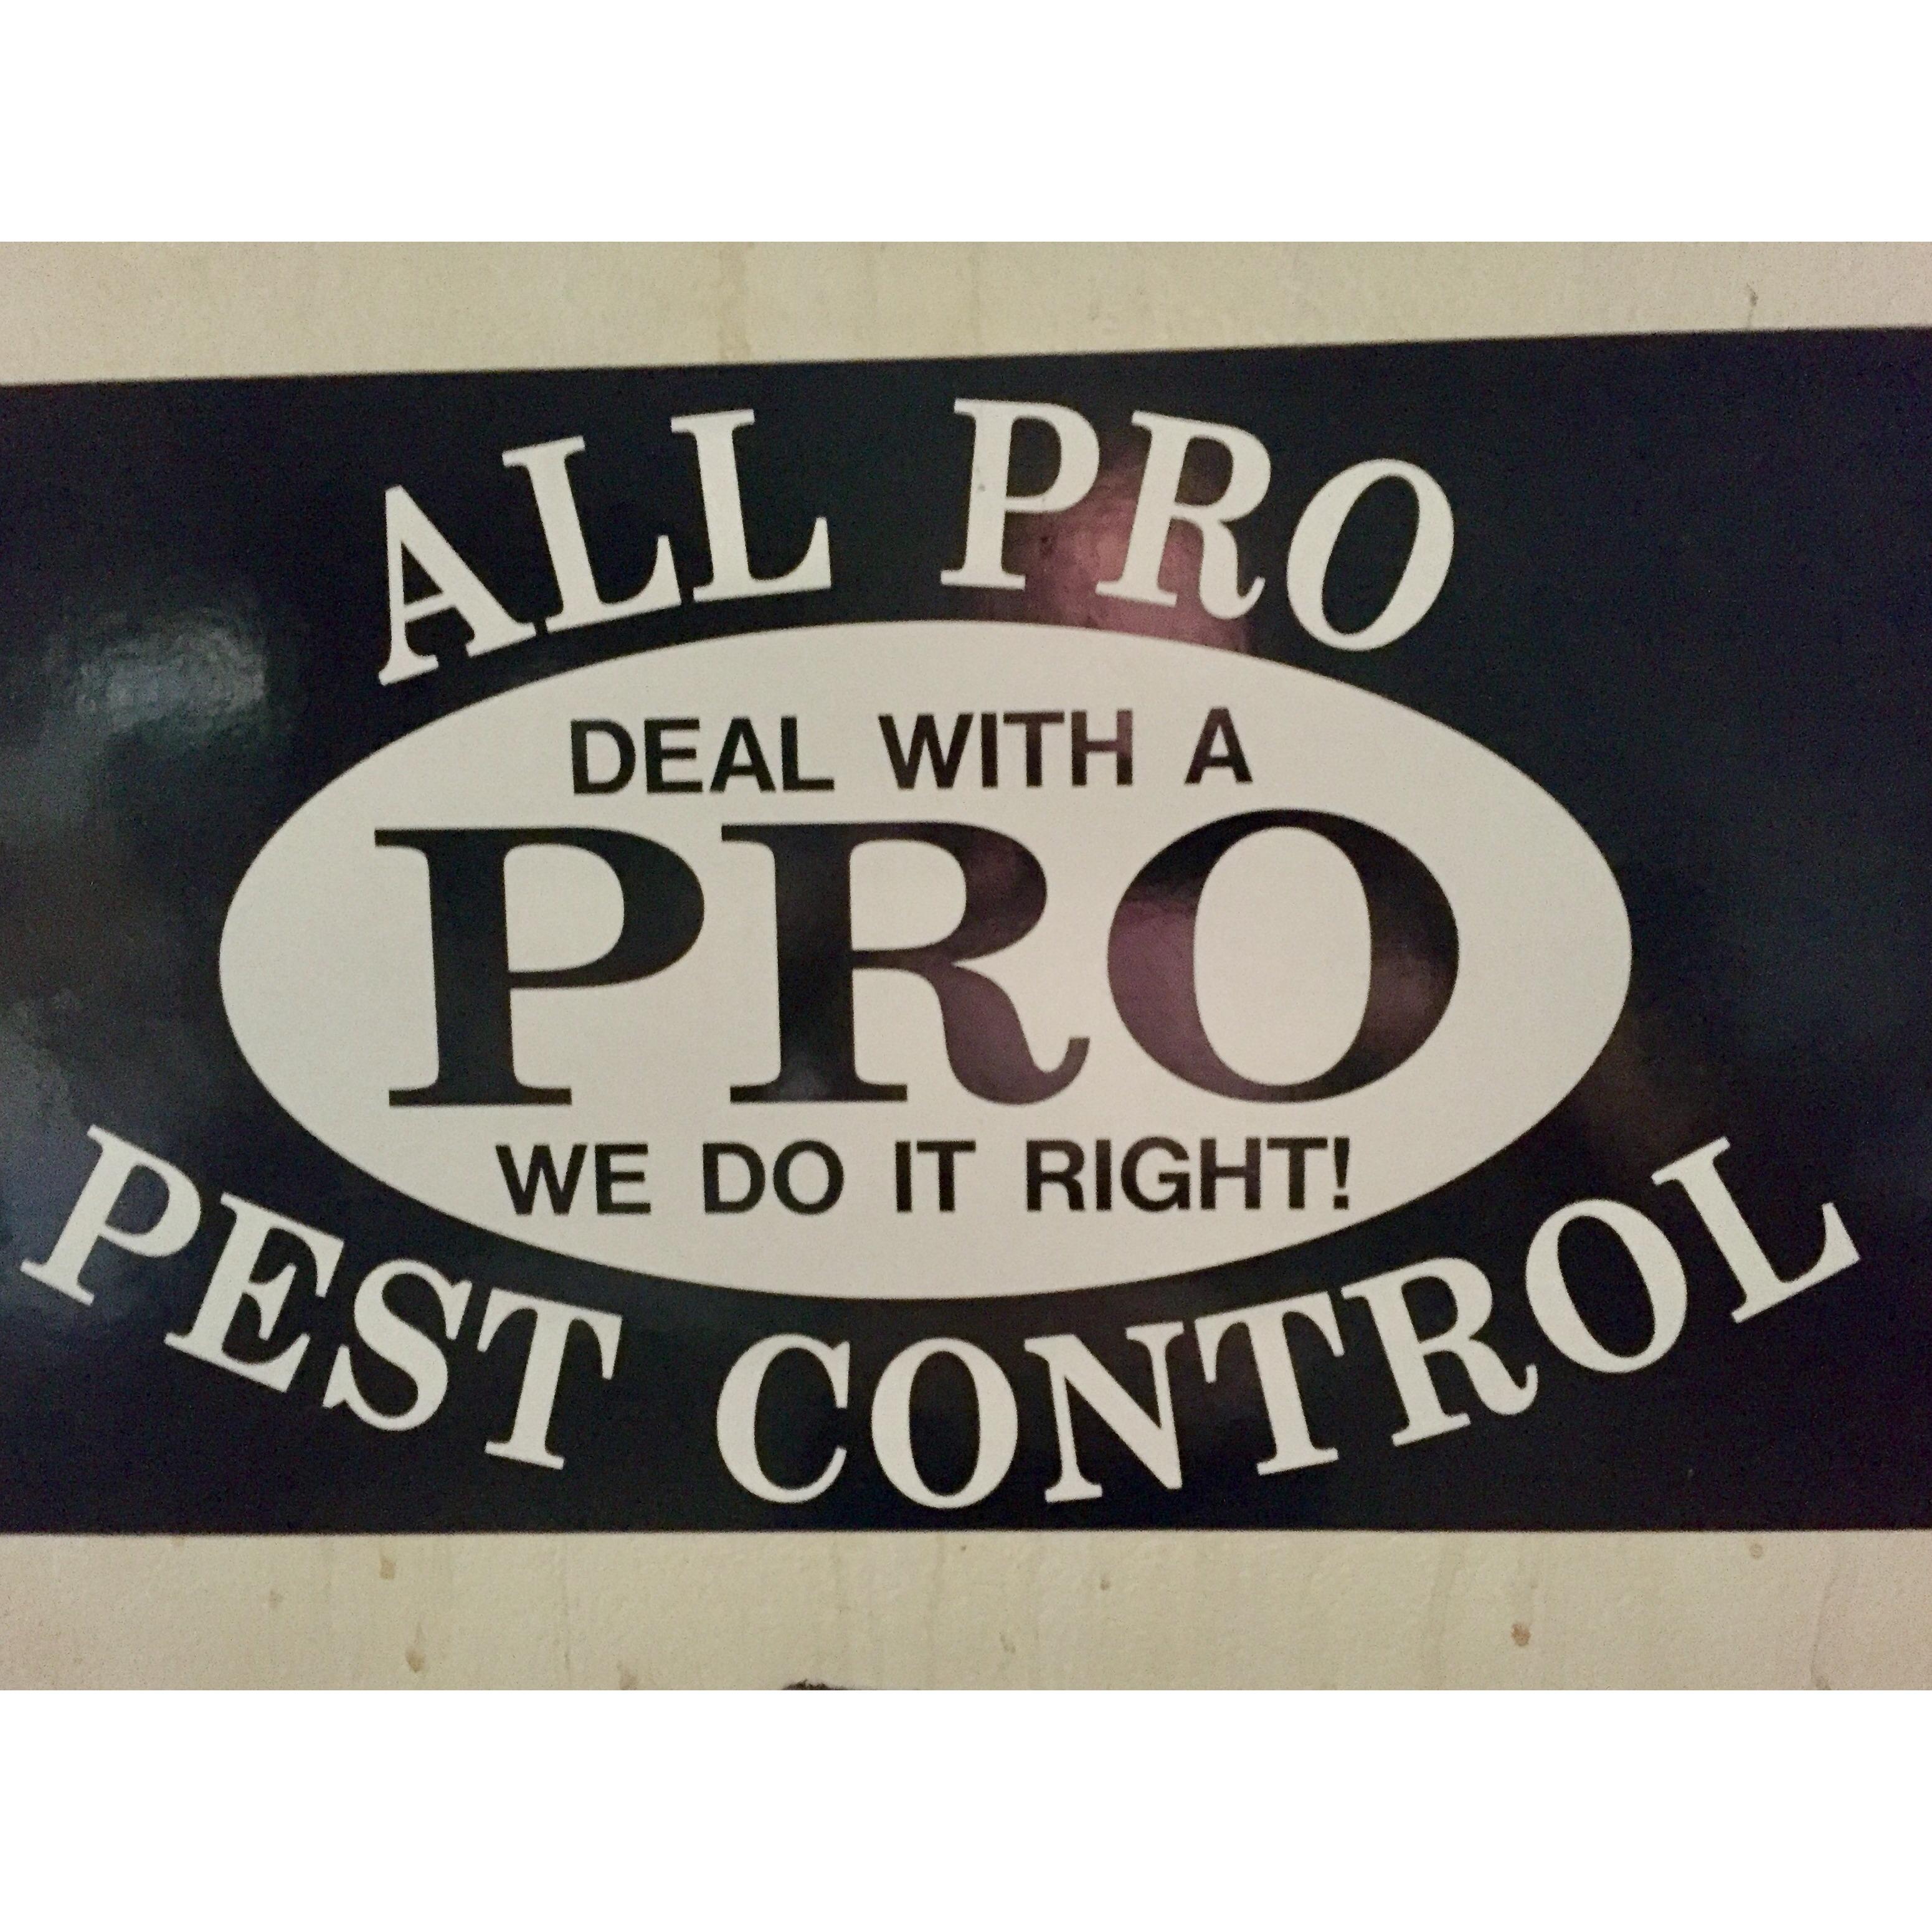 All Pro Pest Control